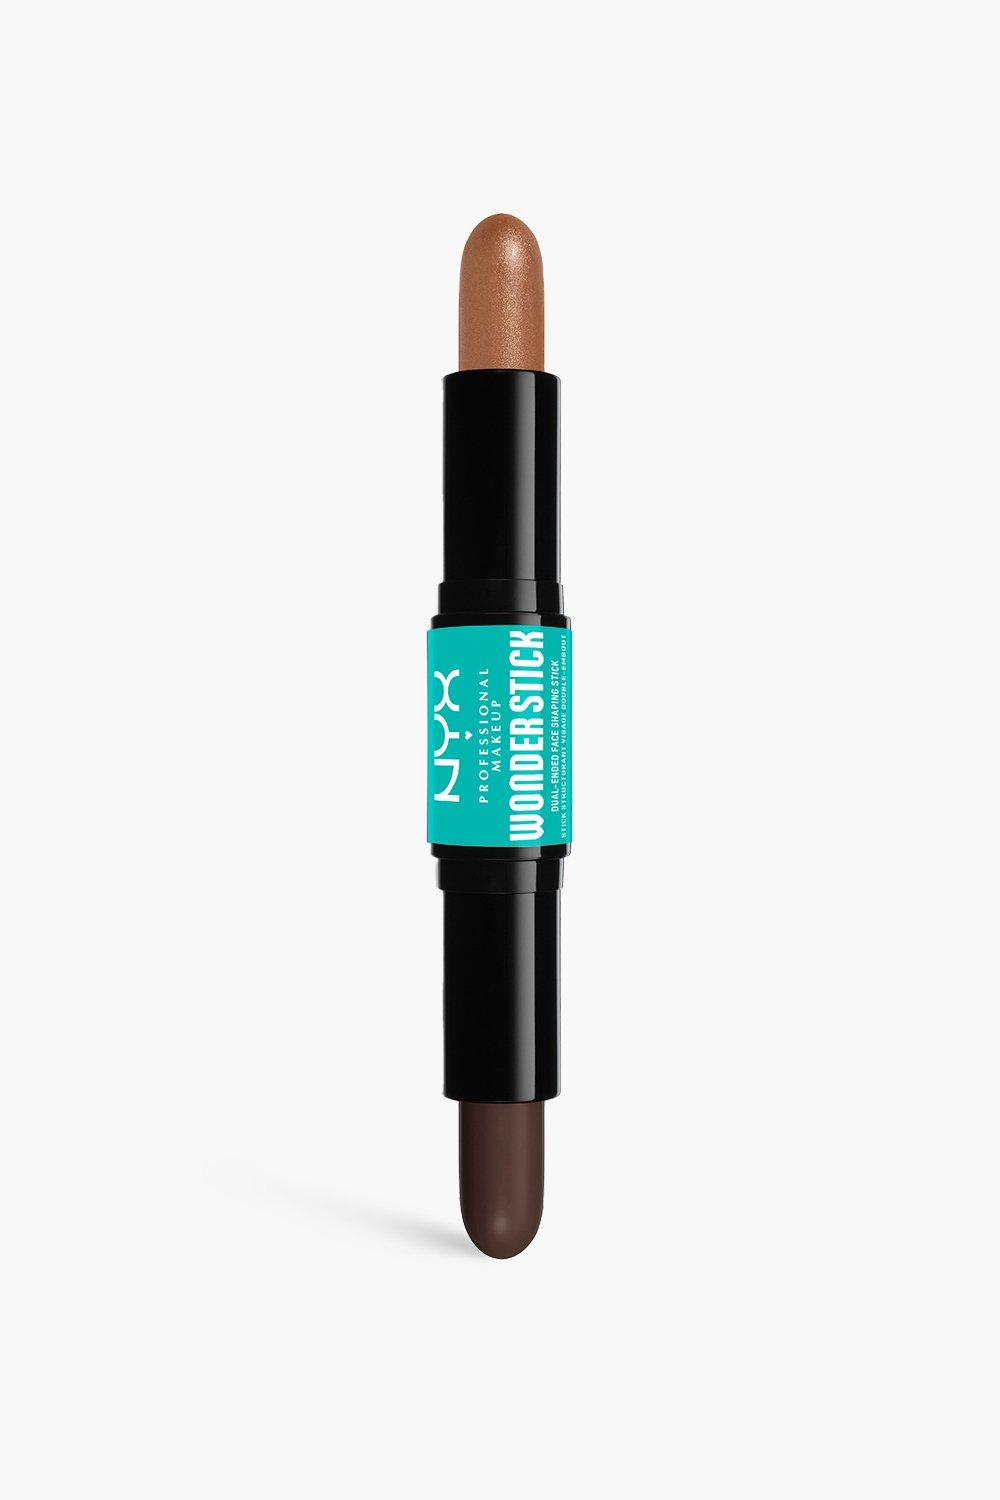 Nyx Professional Makeup Wonder Stick Highlight & Contour Stick, Deep